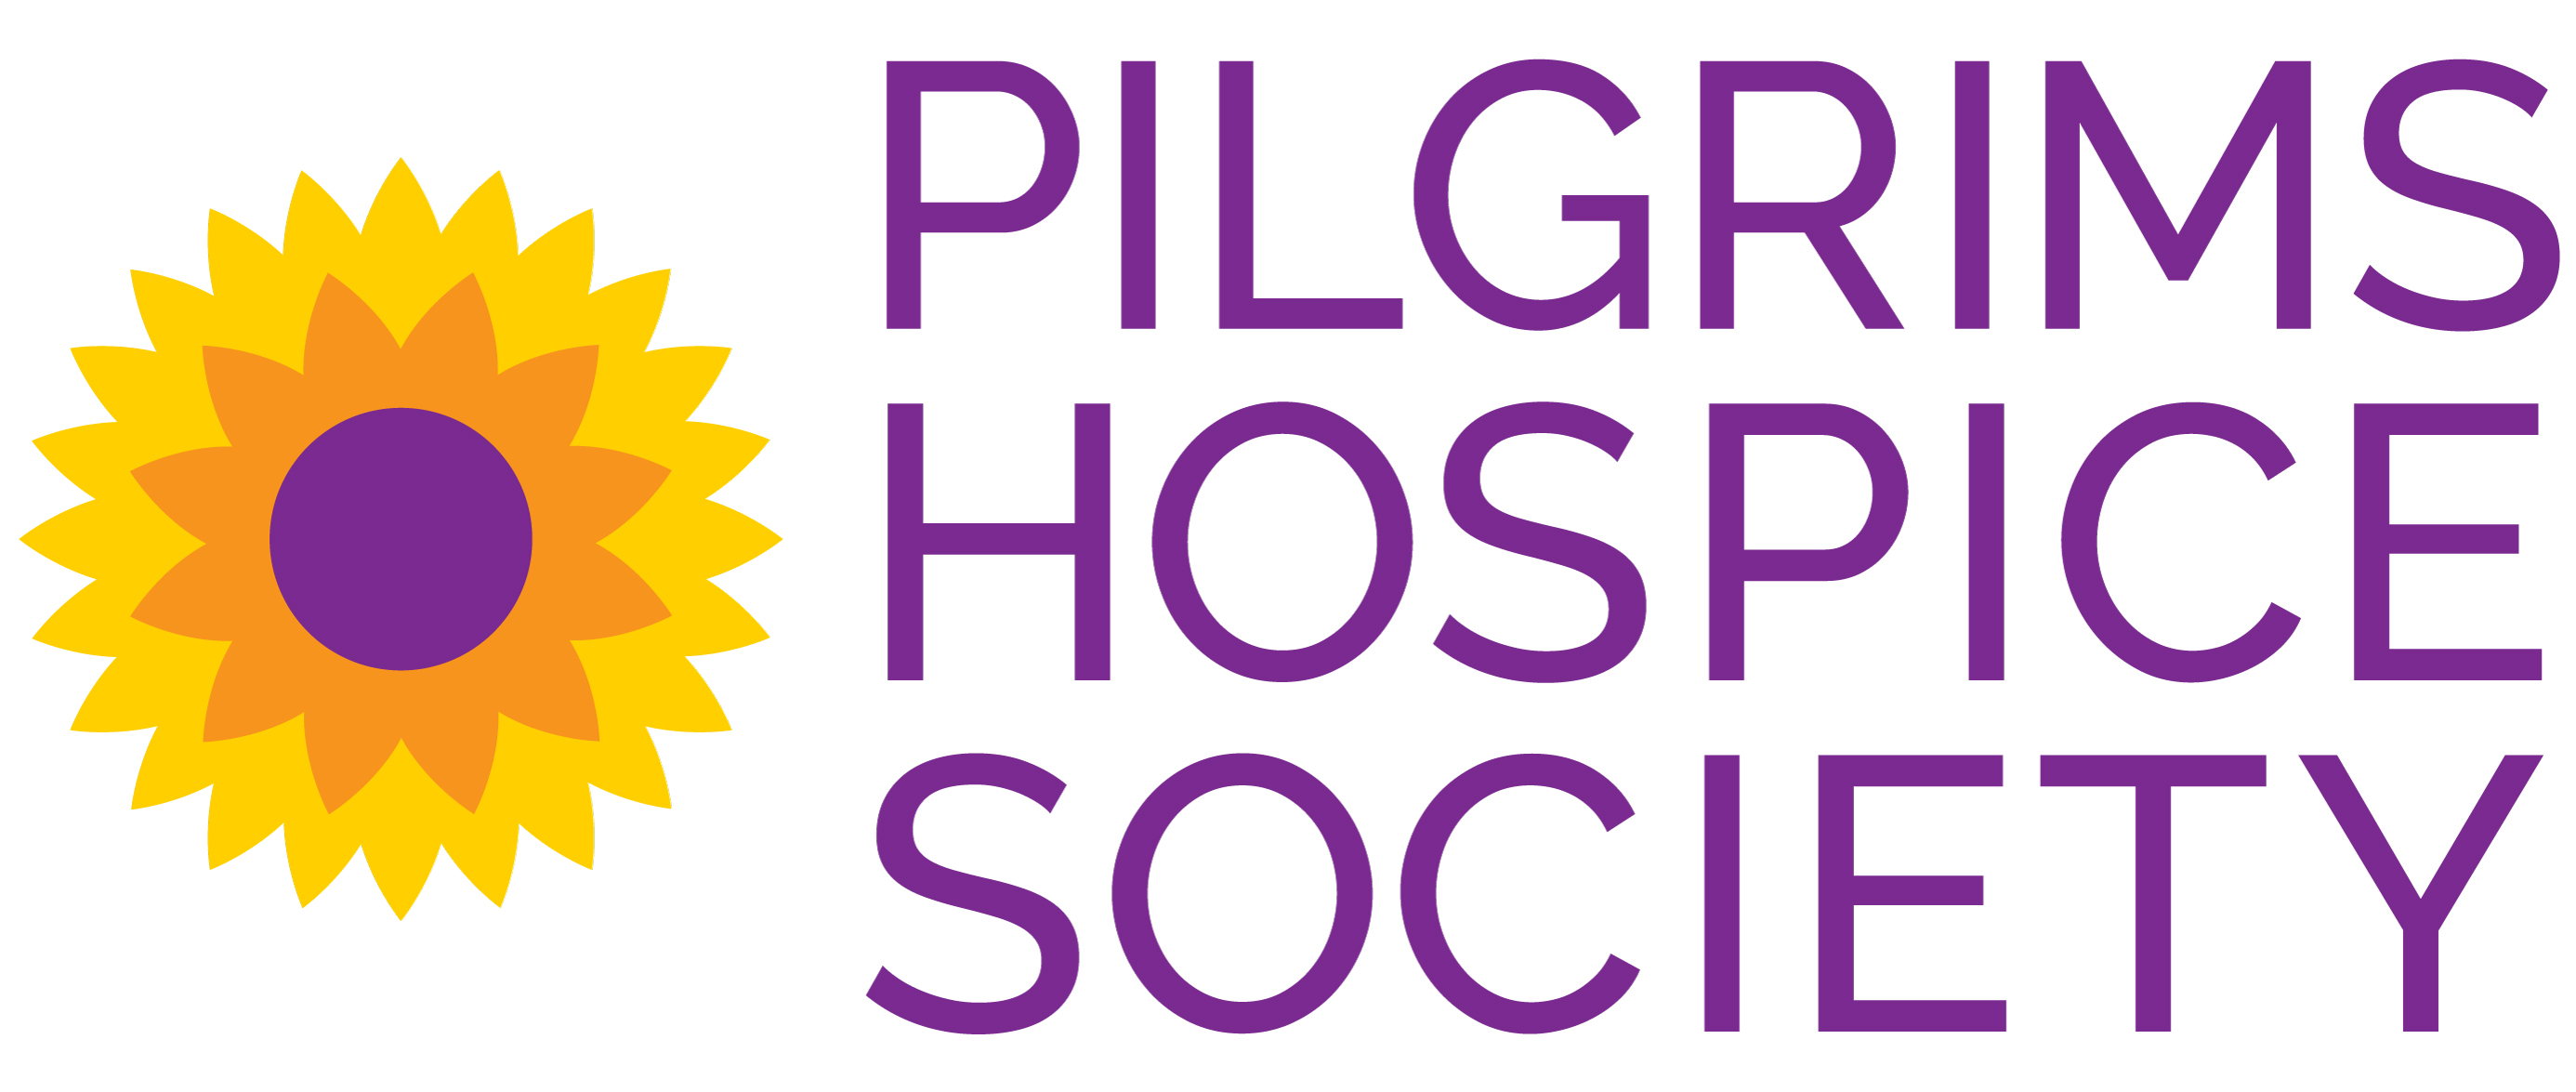 PILGRIMS HOSPICE SOCIETY logo